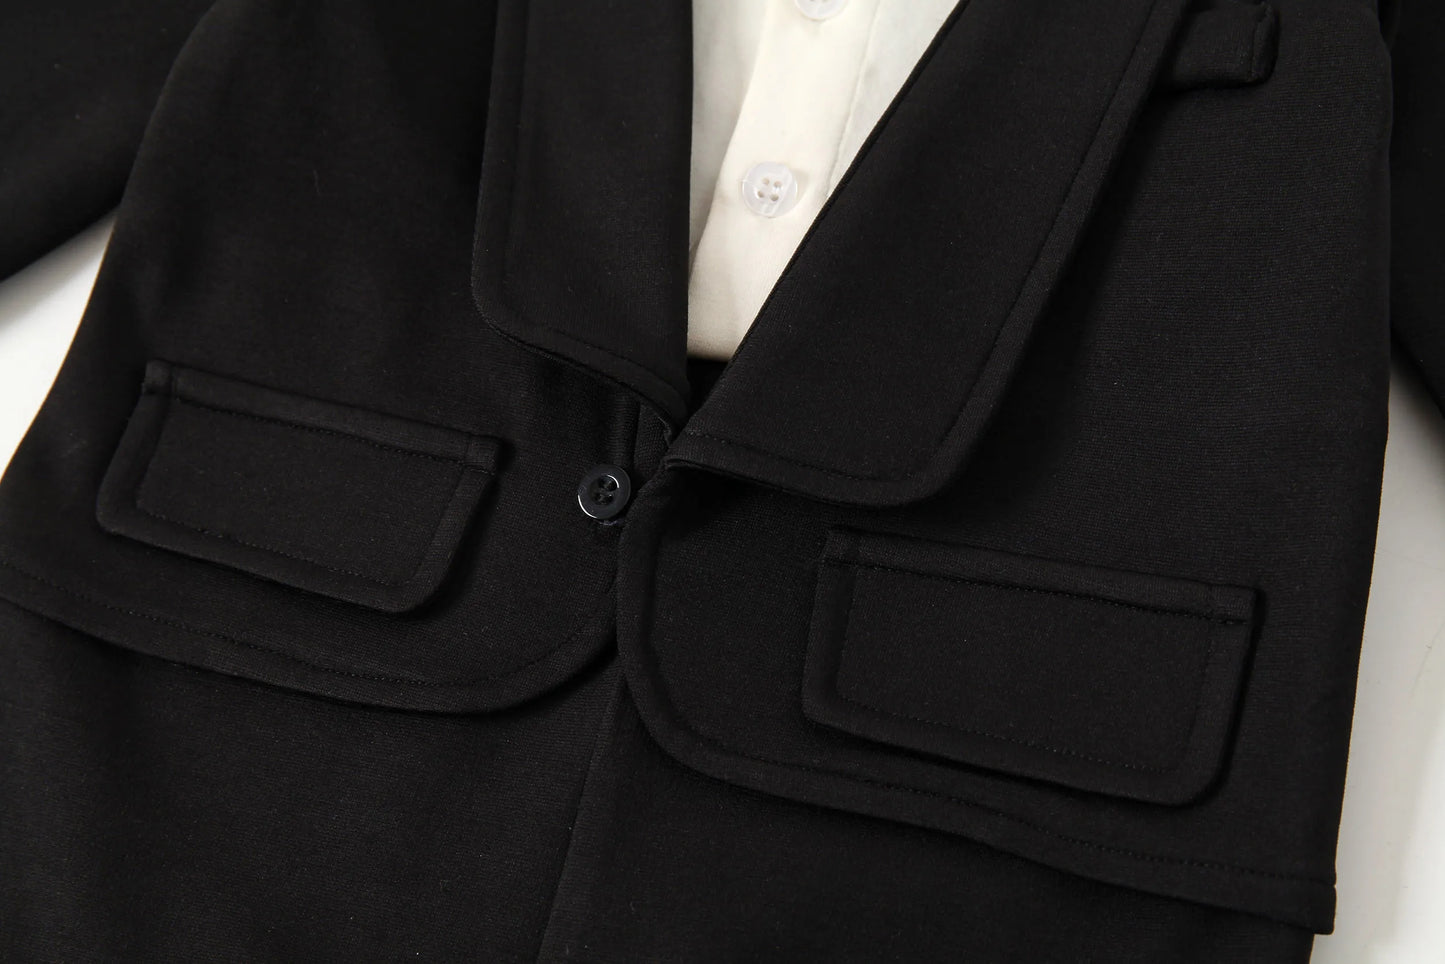 Tuxedo Formal Romper: Cotton Soft Newborn Boy's Long-Sleeve Bodysuit Jumpsuit